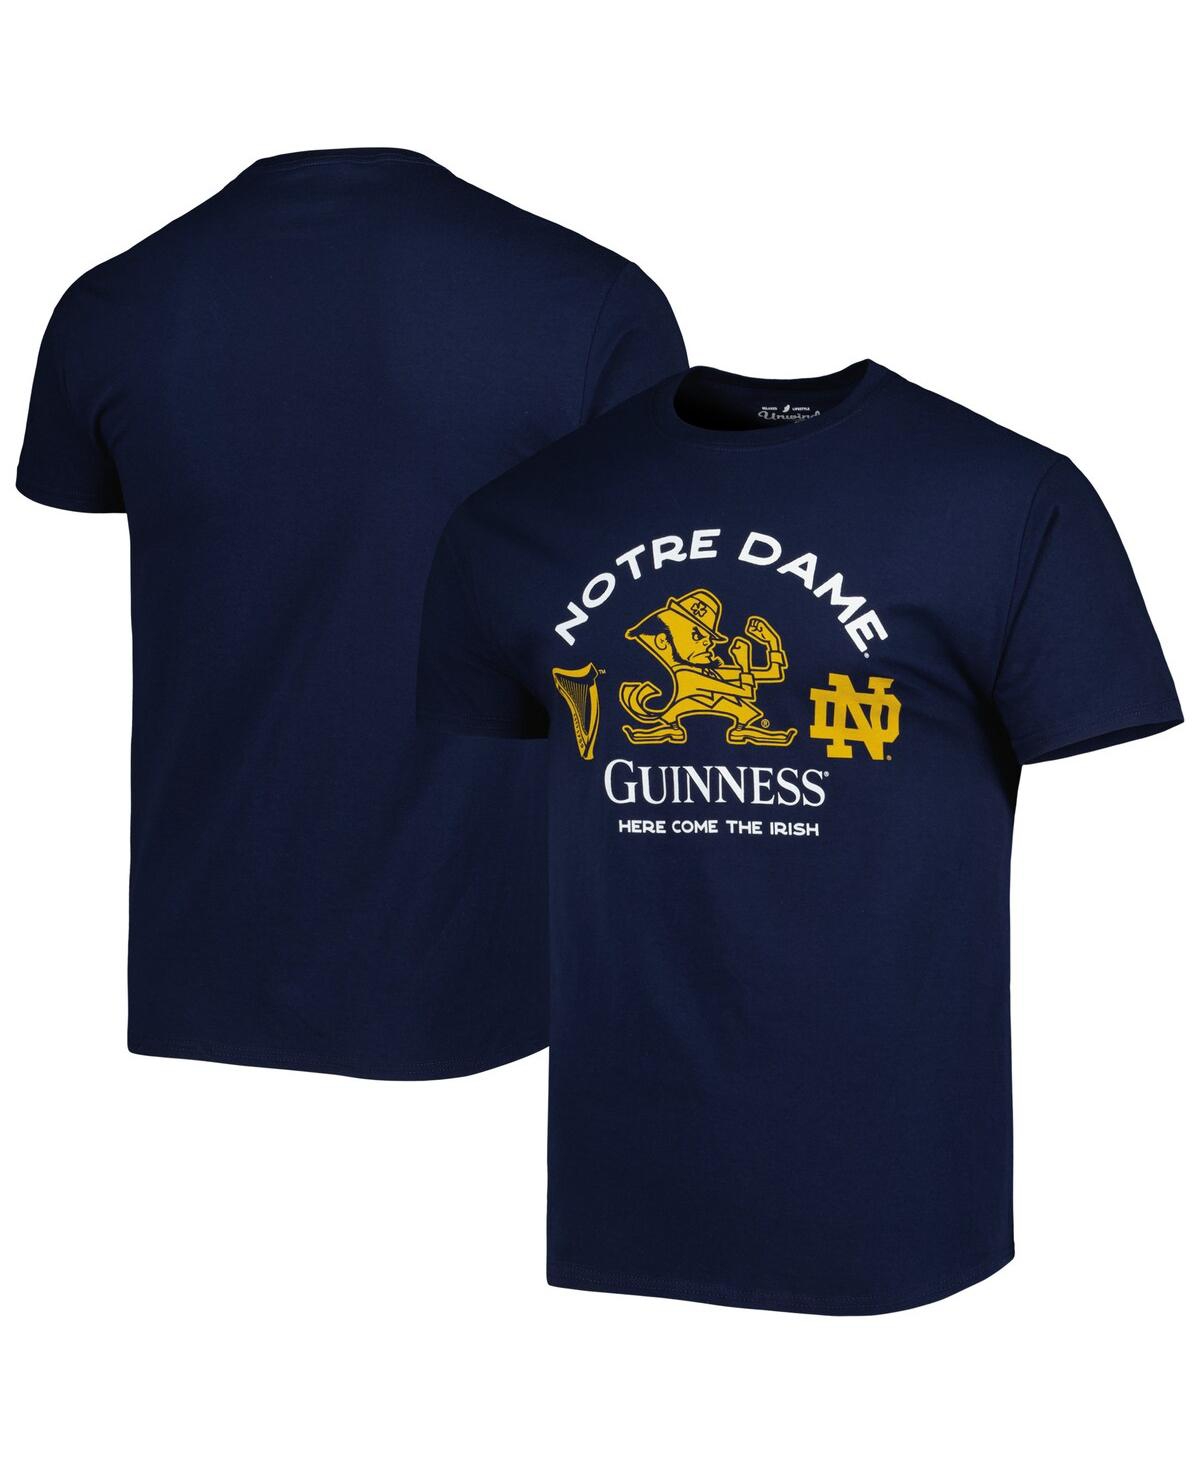 Men's League Collegiate Wear Navy Notre Dame Fighting Irish Guinness Here Come the Irish T-shirt - Navy